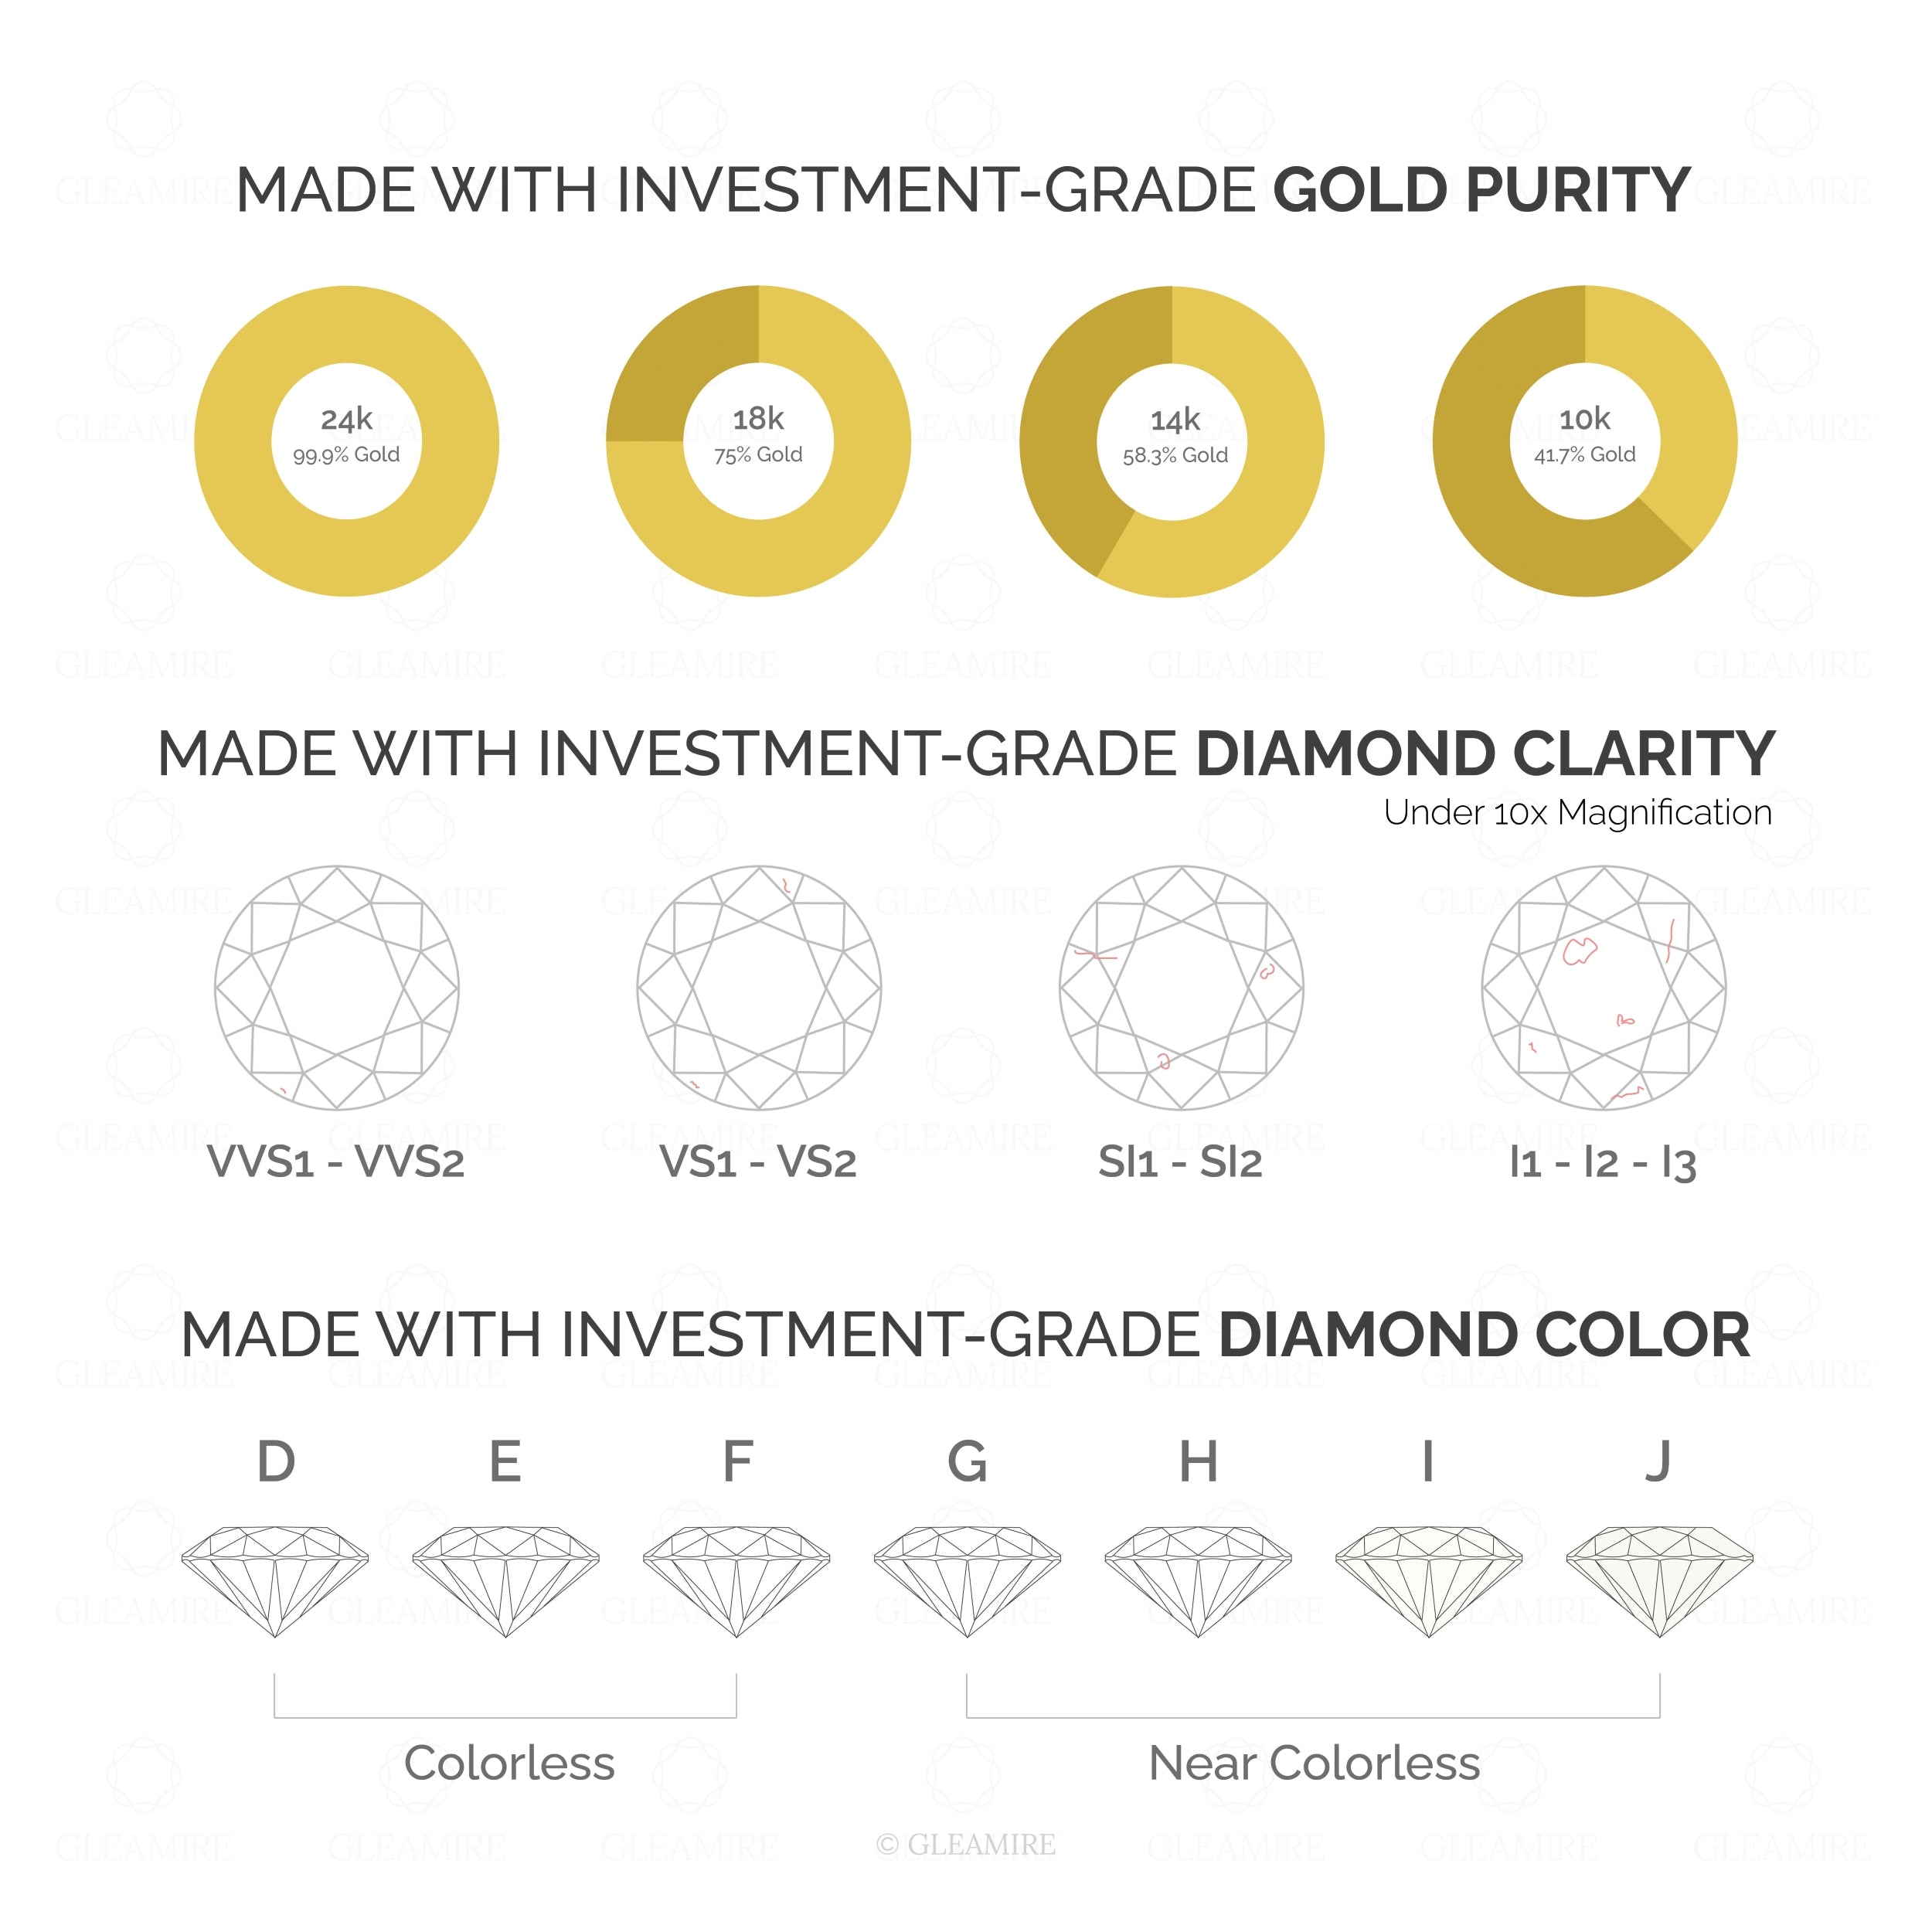 Certified 18K Gold 0.9ct Natural Diamond F-VVS Wedding Eternity Band White Ring